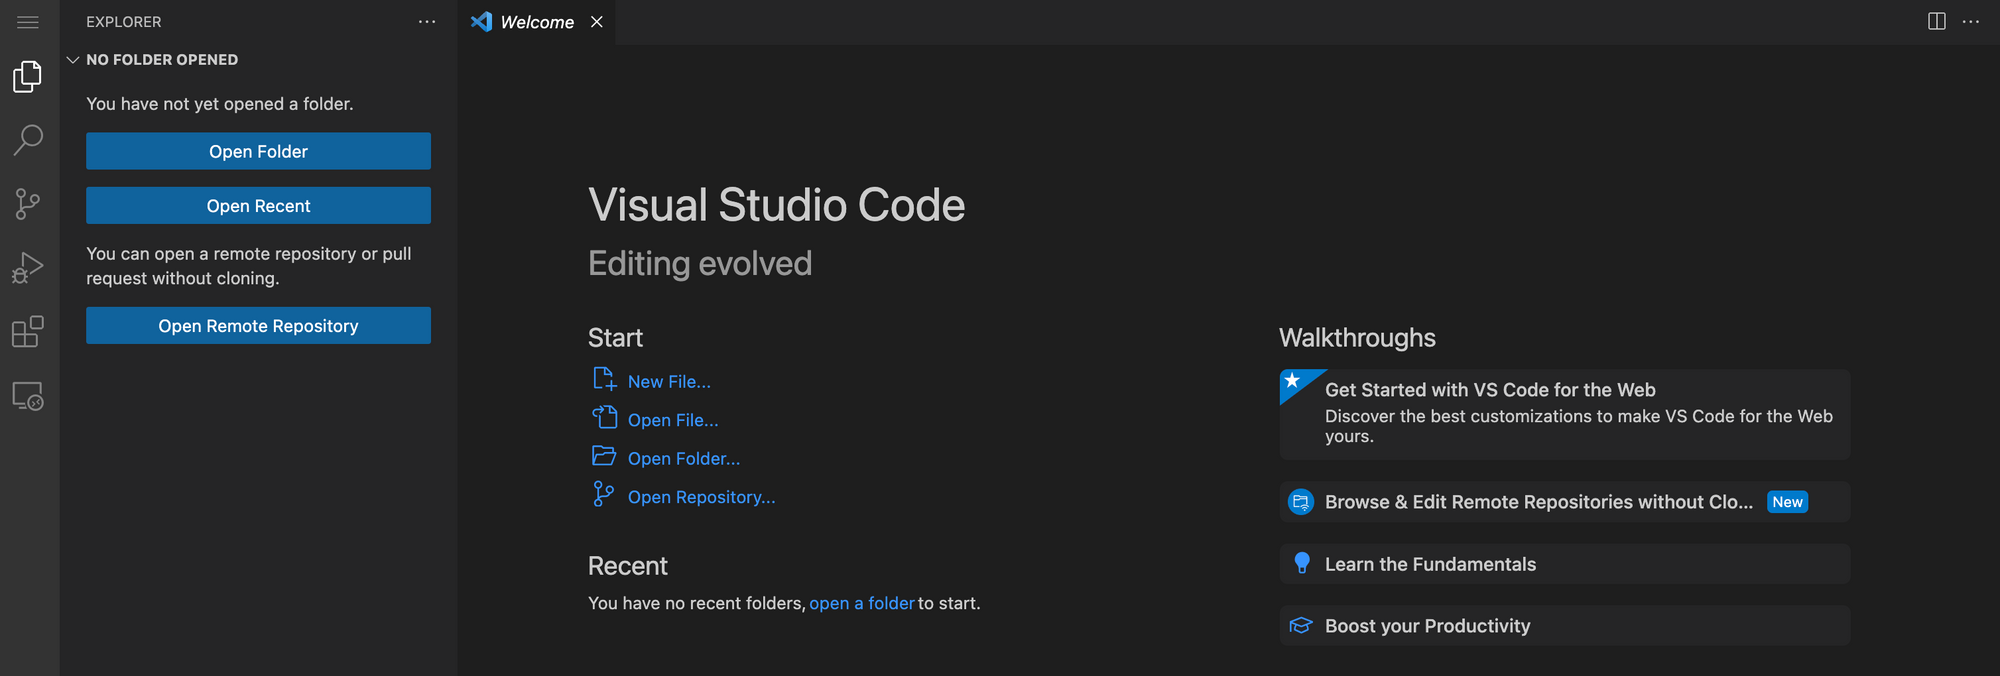 Visual Studio Code for the Web